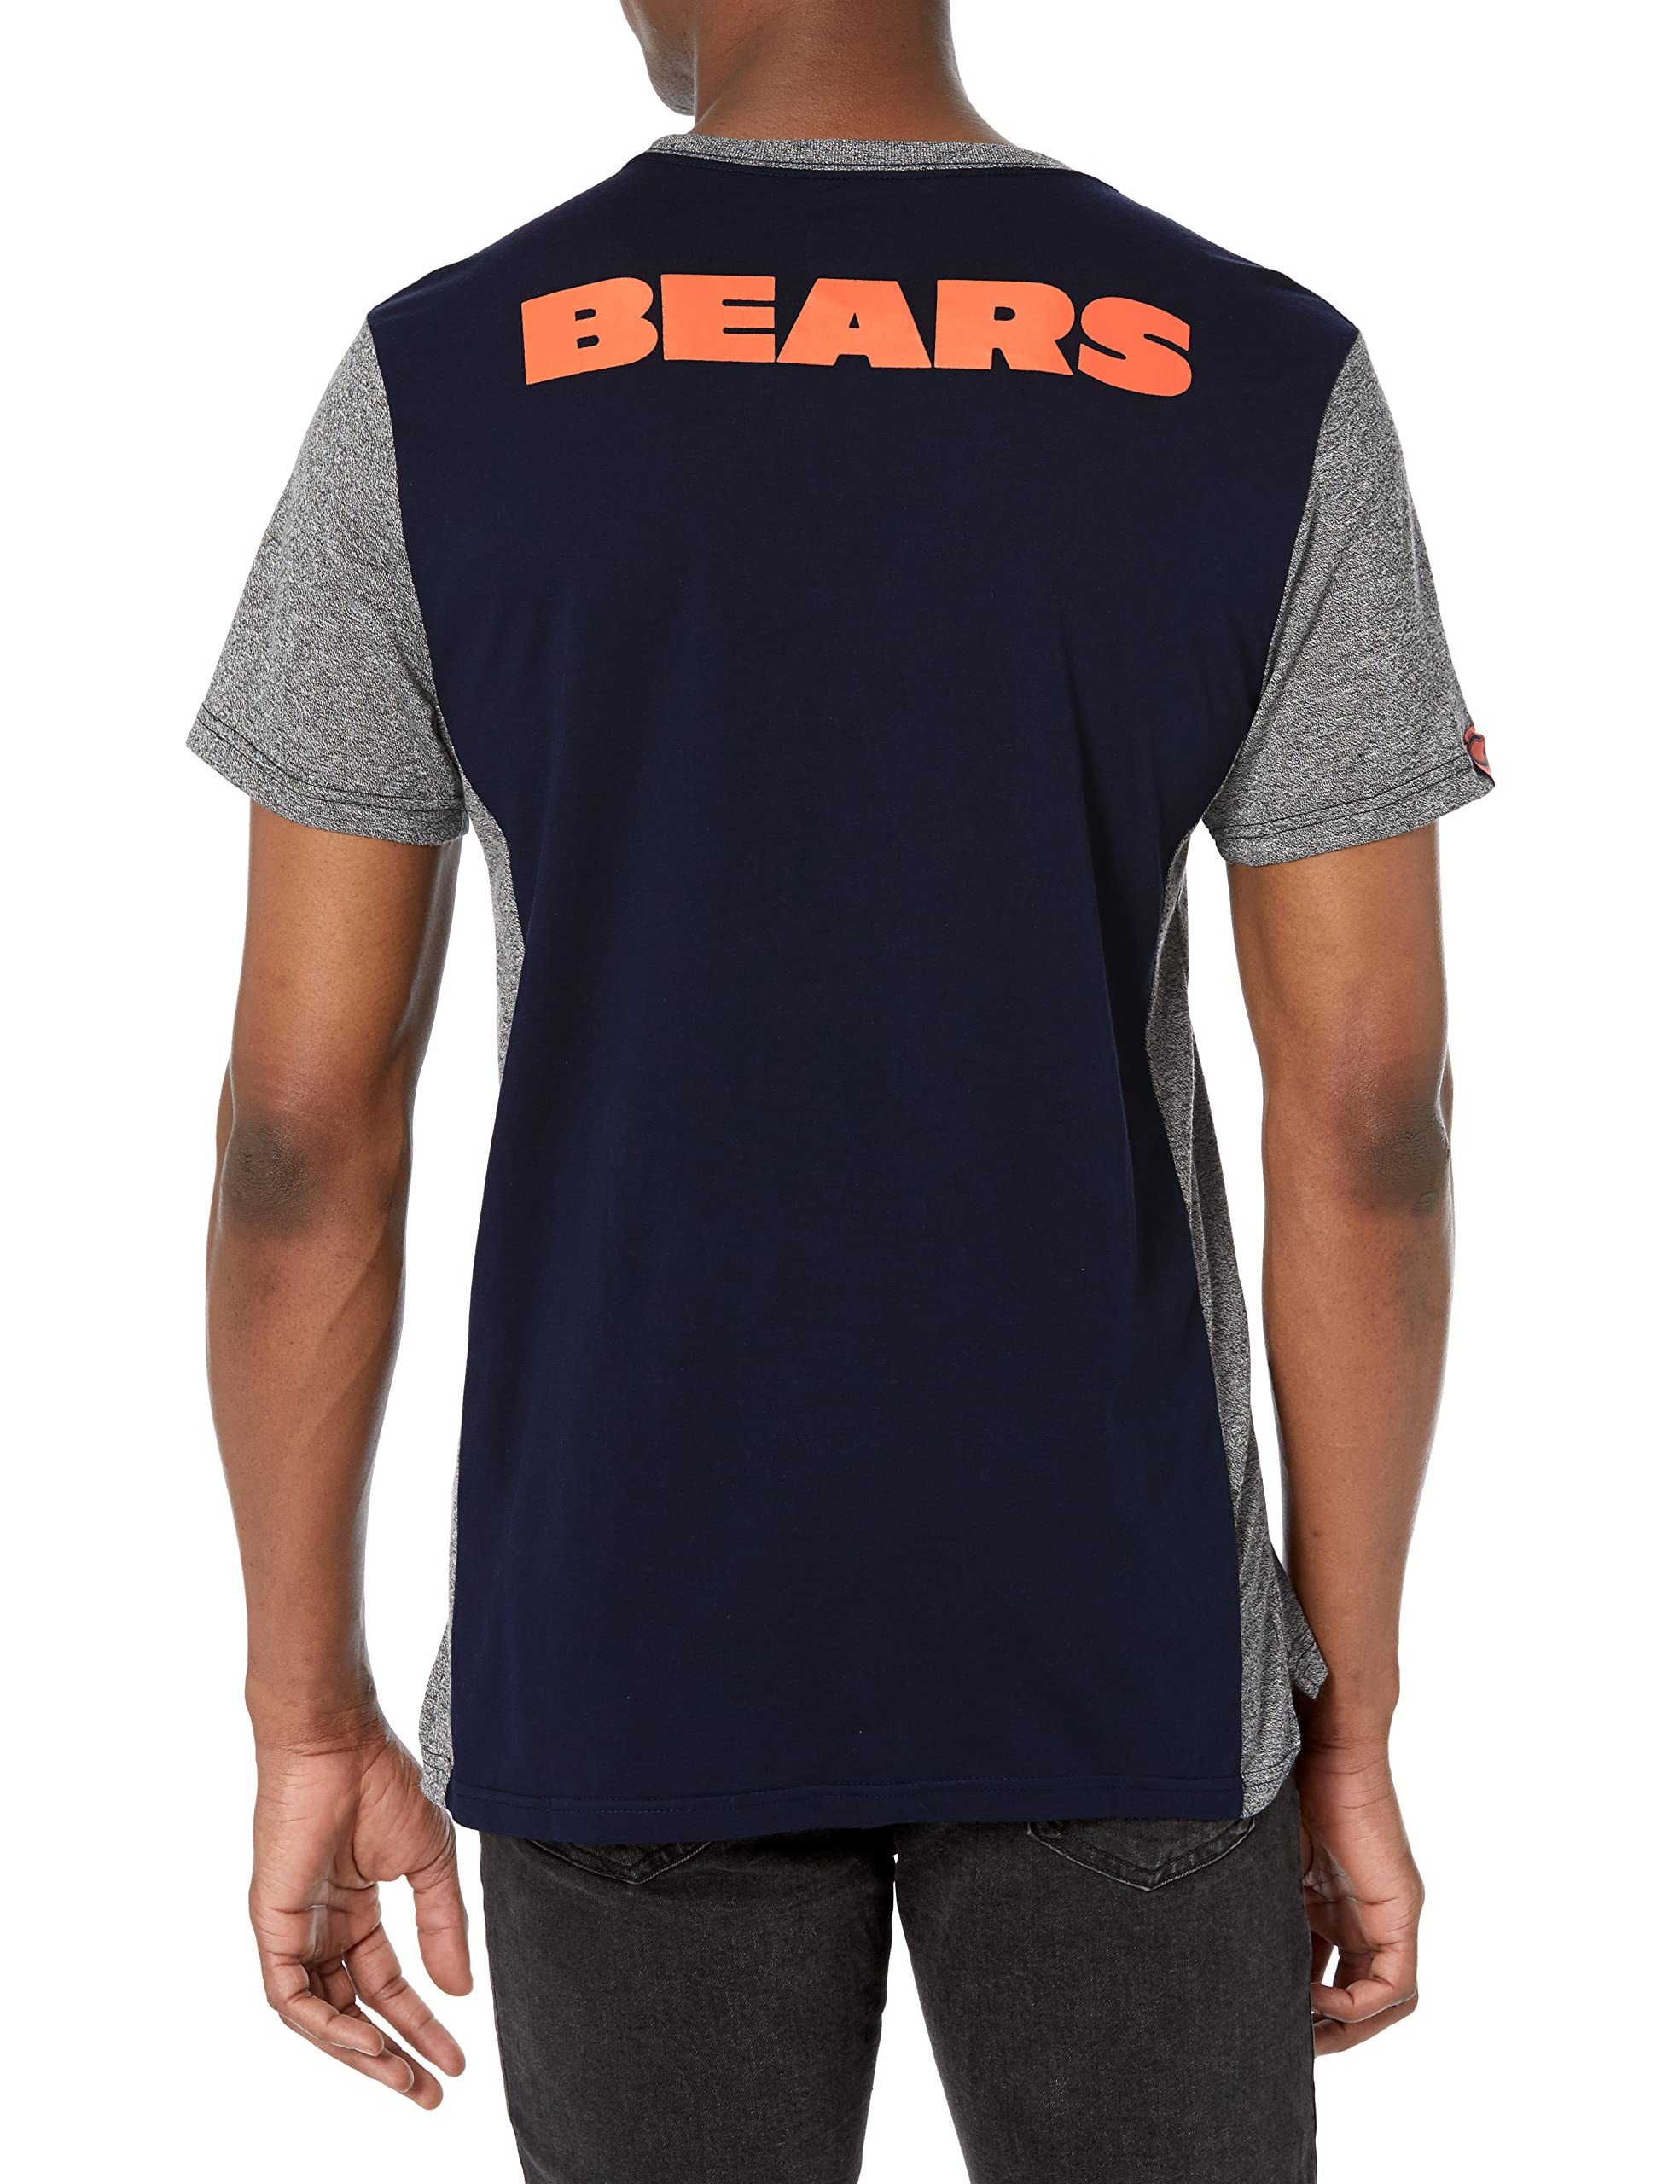 Ultra Game NFL Chicago Bears Mens T-Shirt Raglan Block Short Sleeve Tee Shirt|Chicago Bears